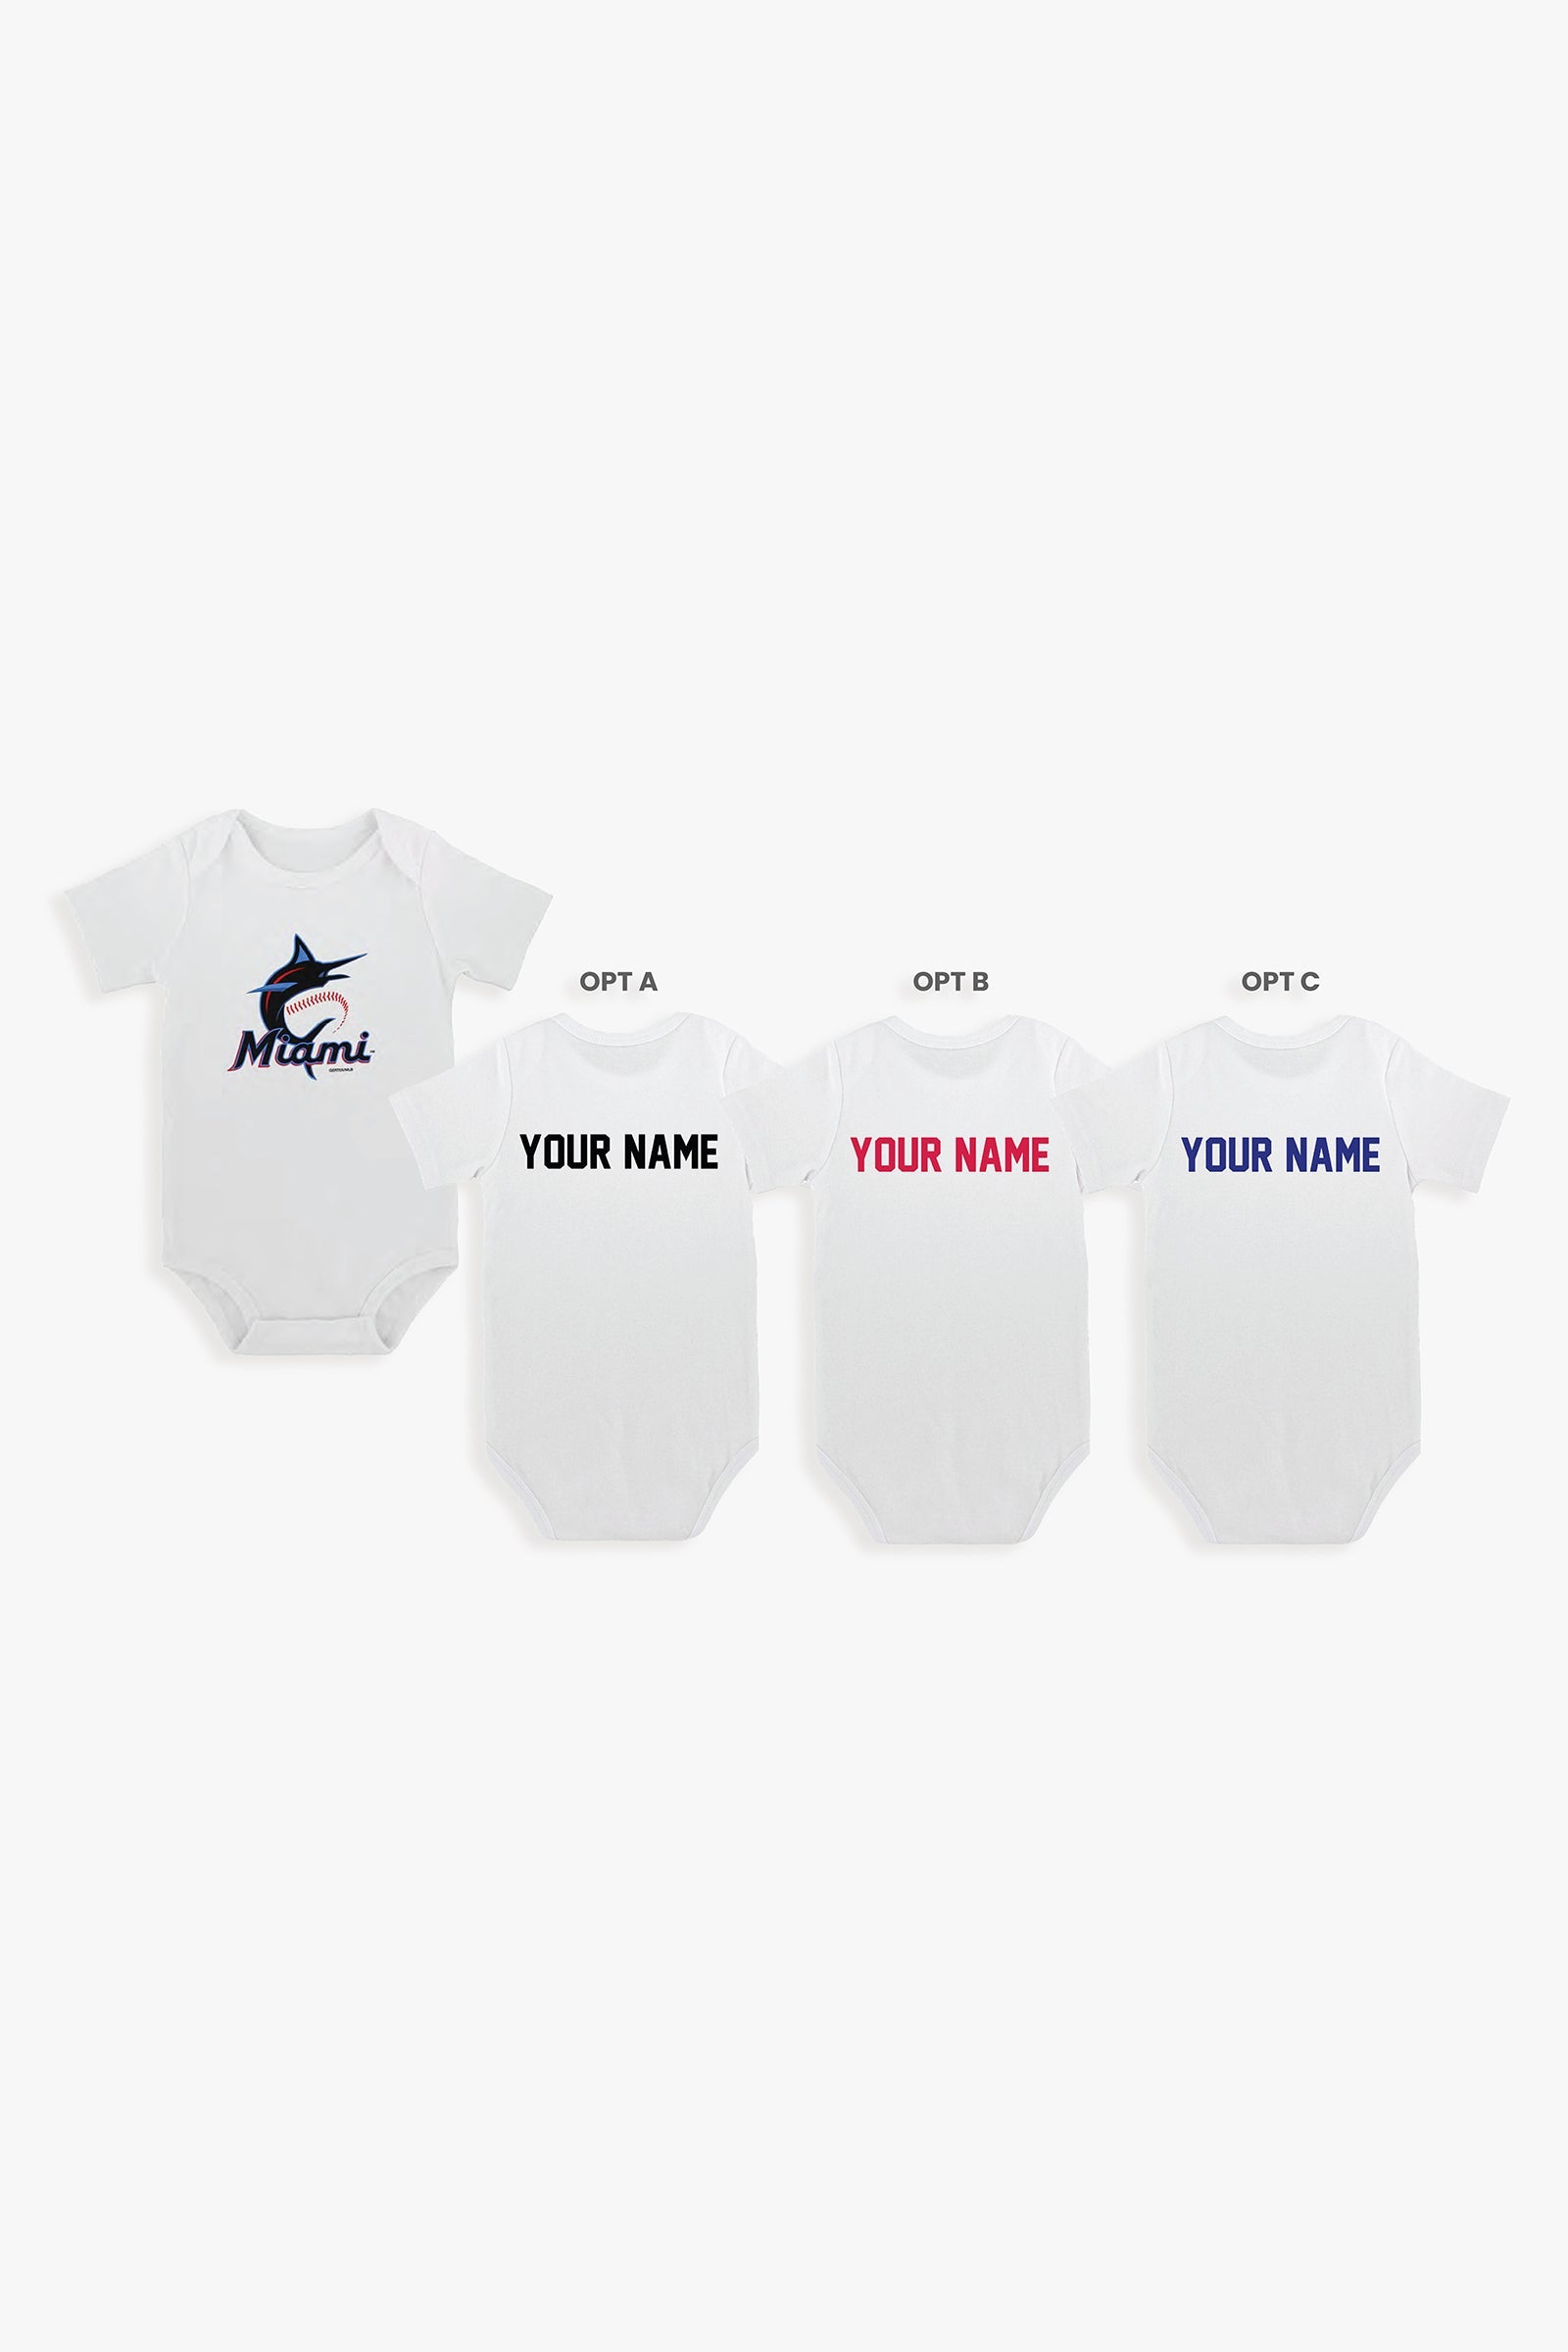 Customizable MLB Baby Bodysuit in White (9-12 Months)